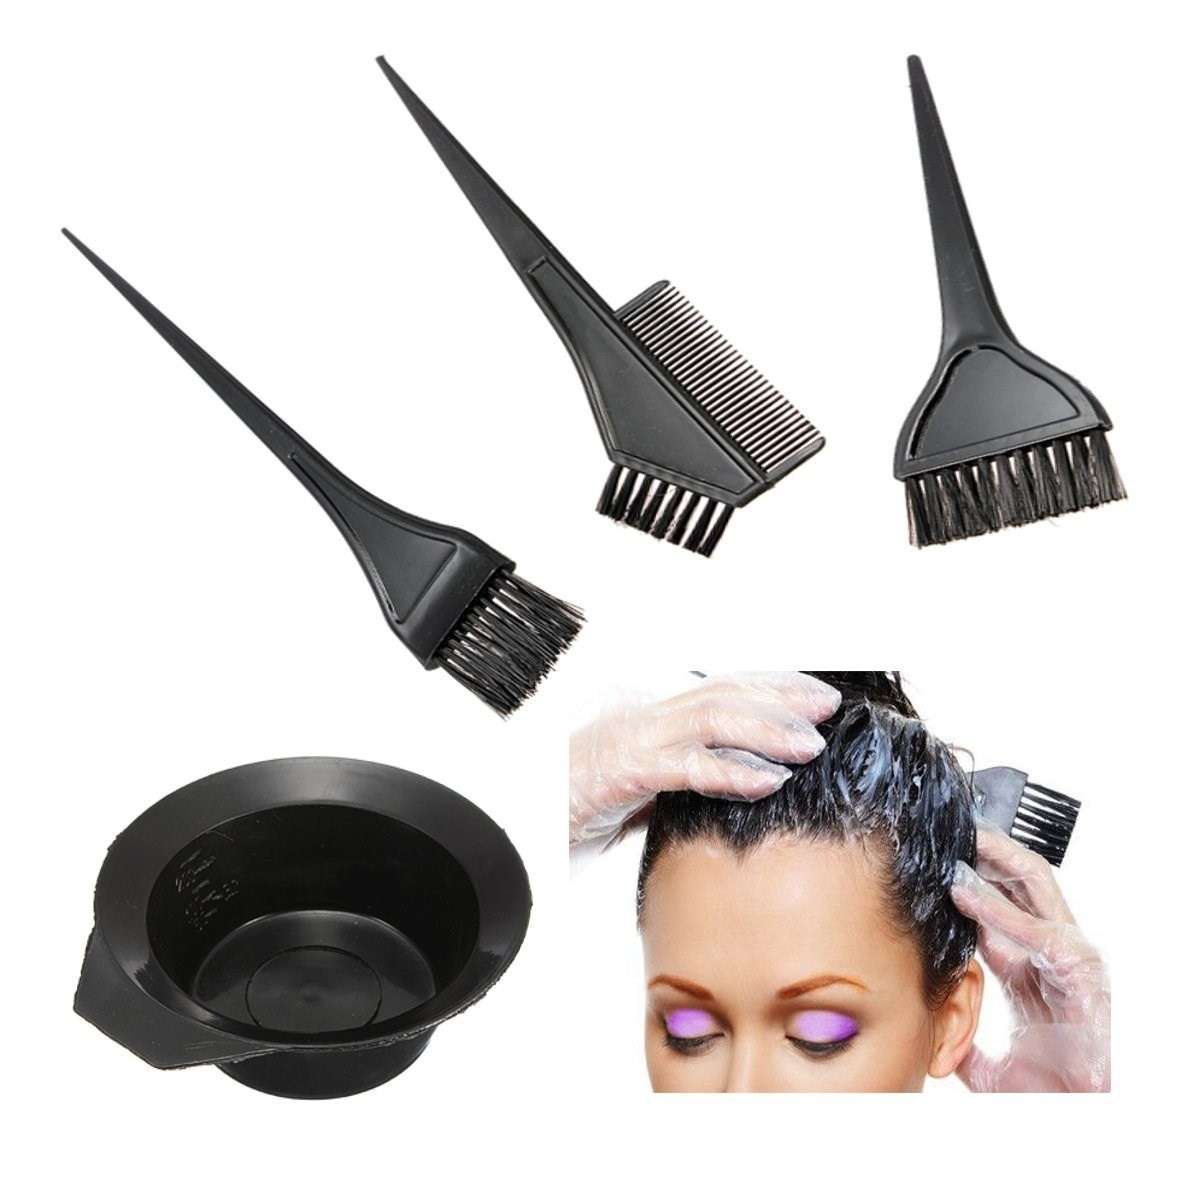 4pcs 1 Set Black Plastic Hair Dye Coloring Brush Comb Mixing Bowl Barber Salon Tint Hairdressing Styling Tools